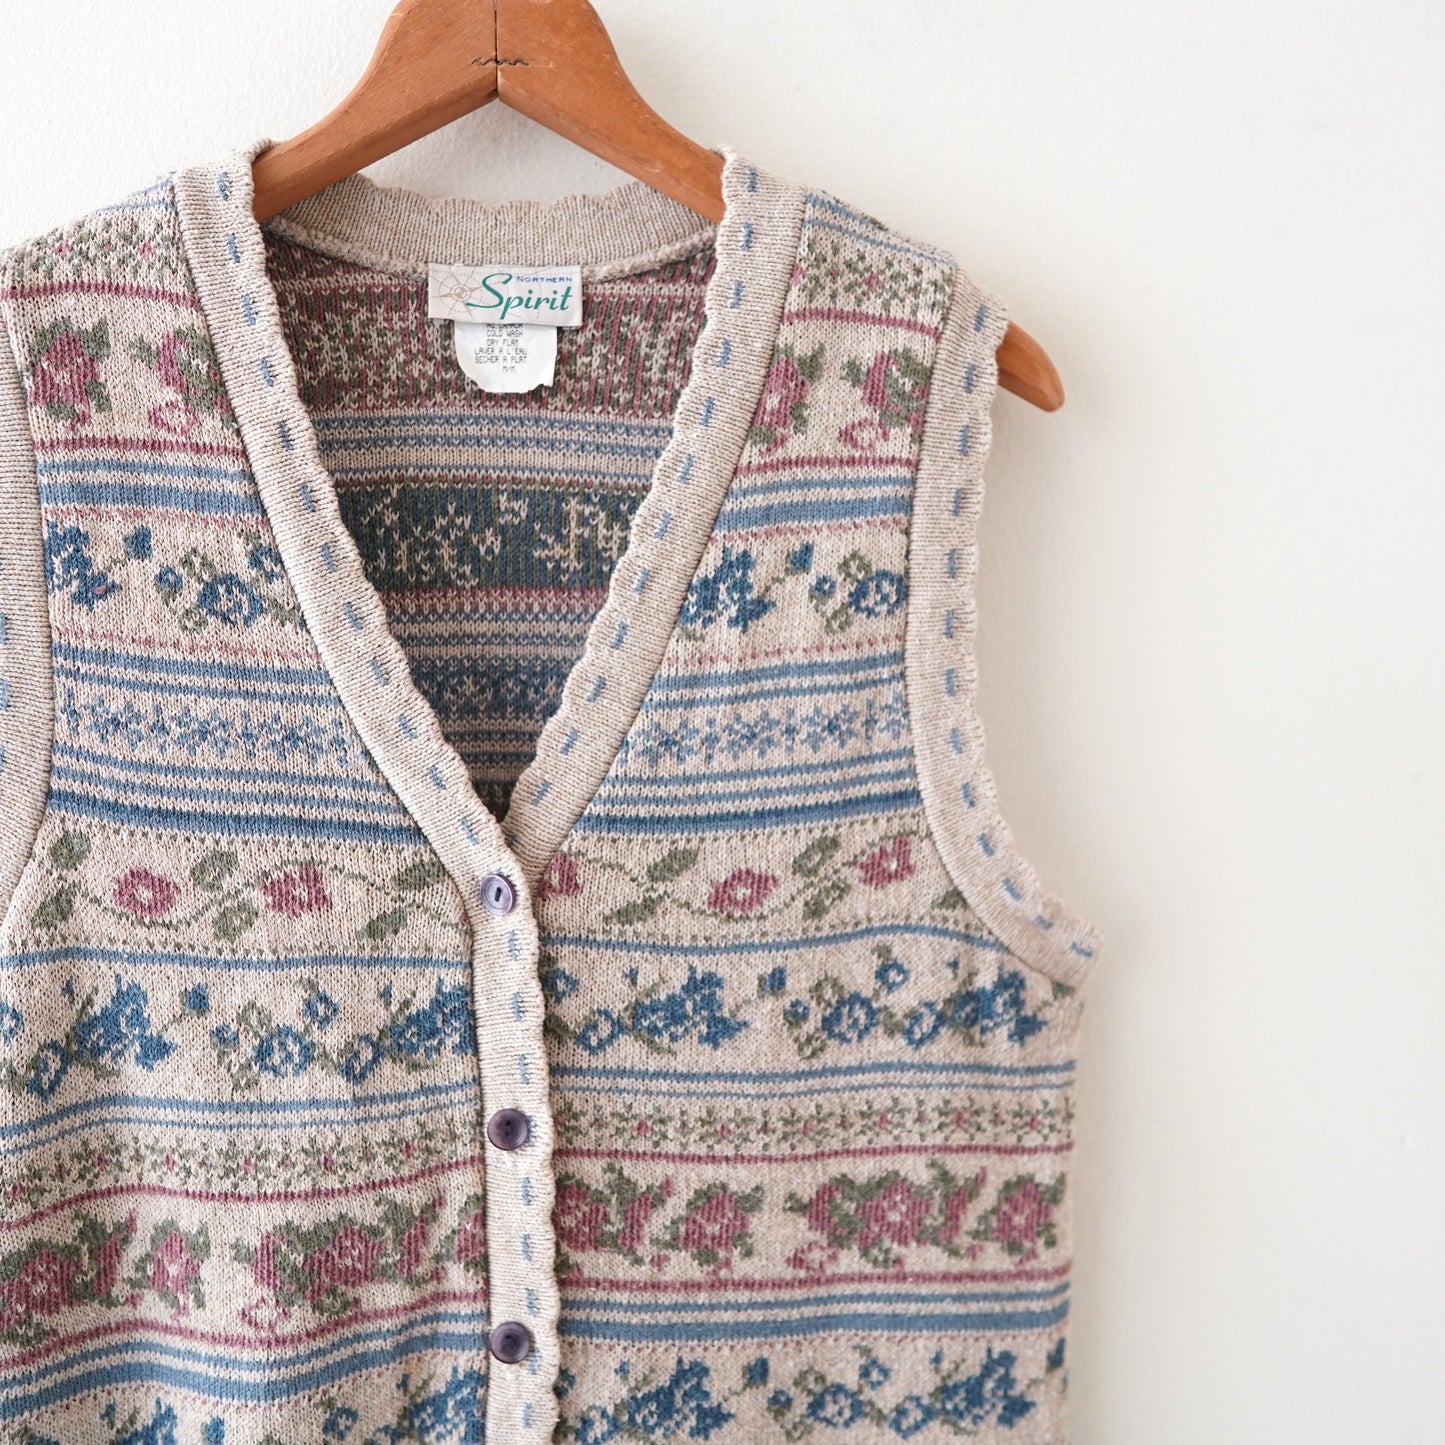 Spirit flower knit vest